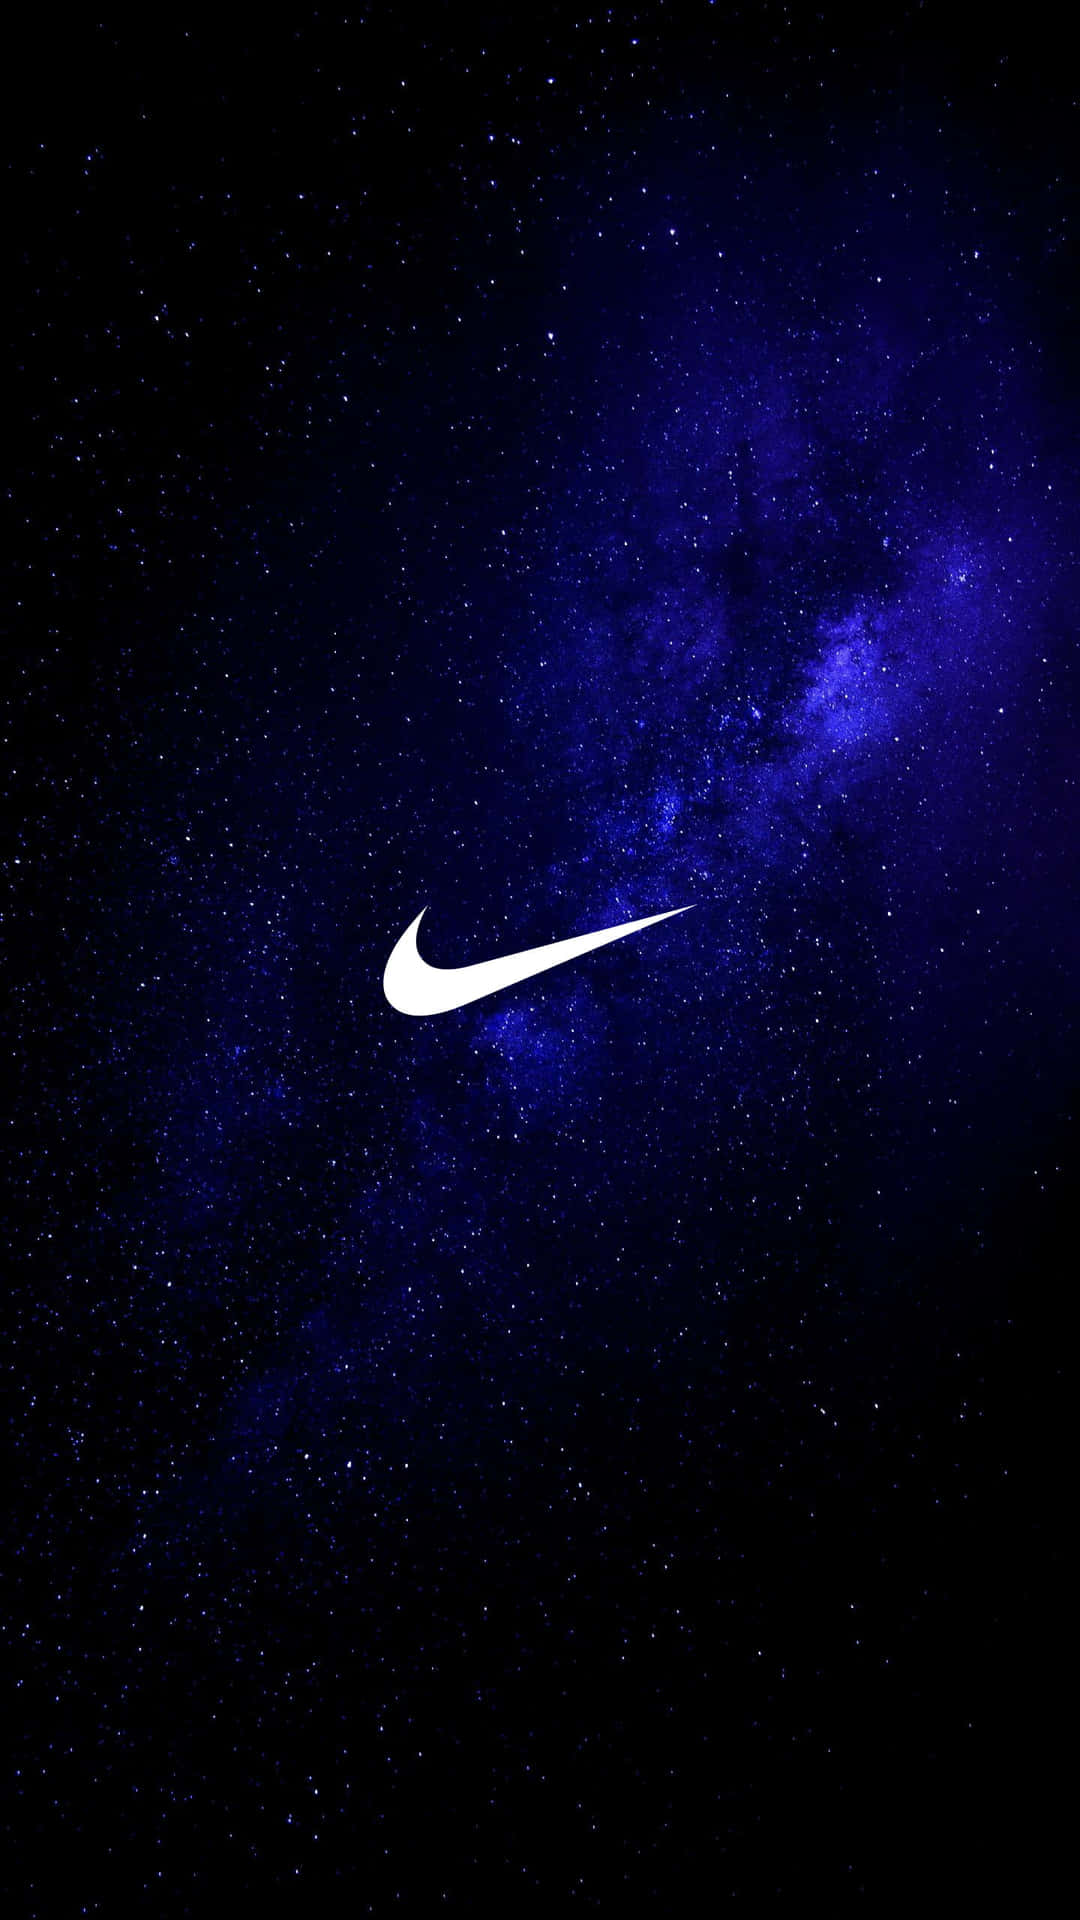 Nike Galaxy 1440 X 2560 Wallpaper